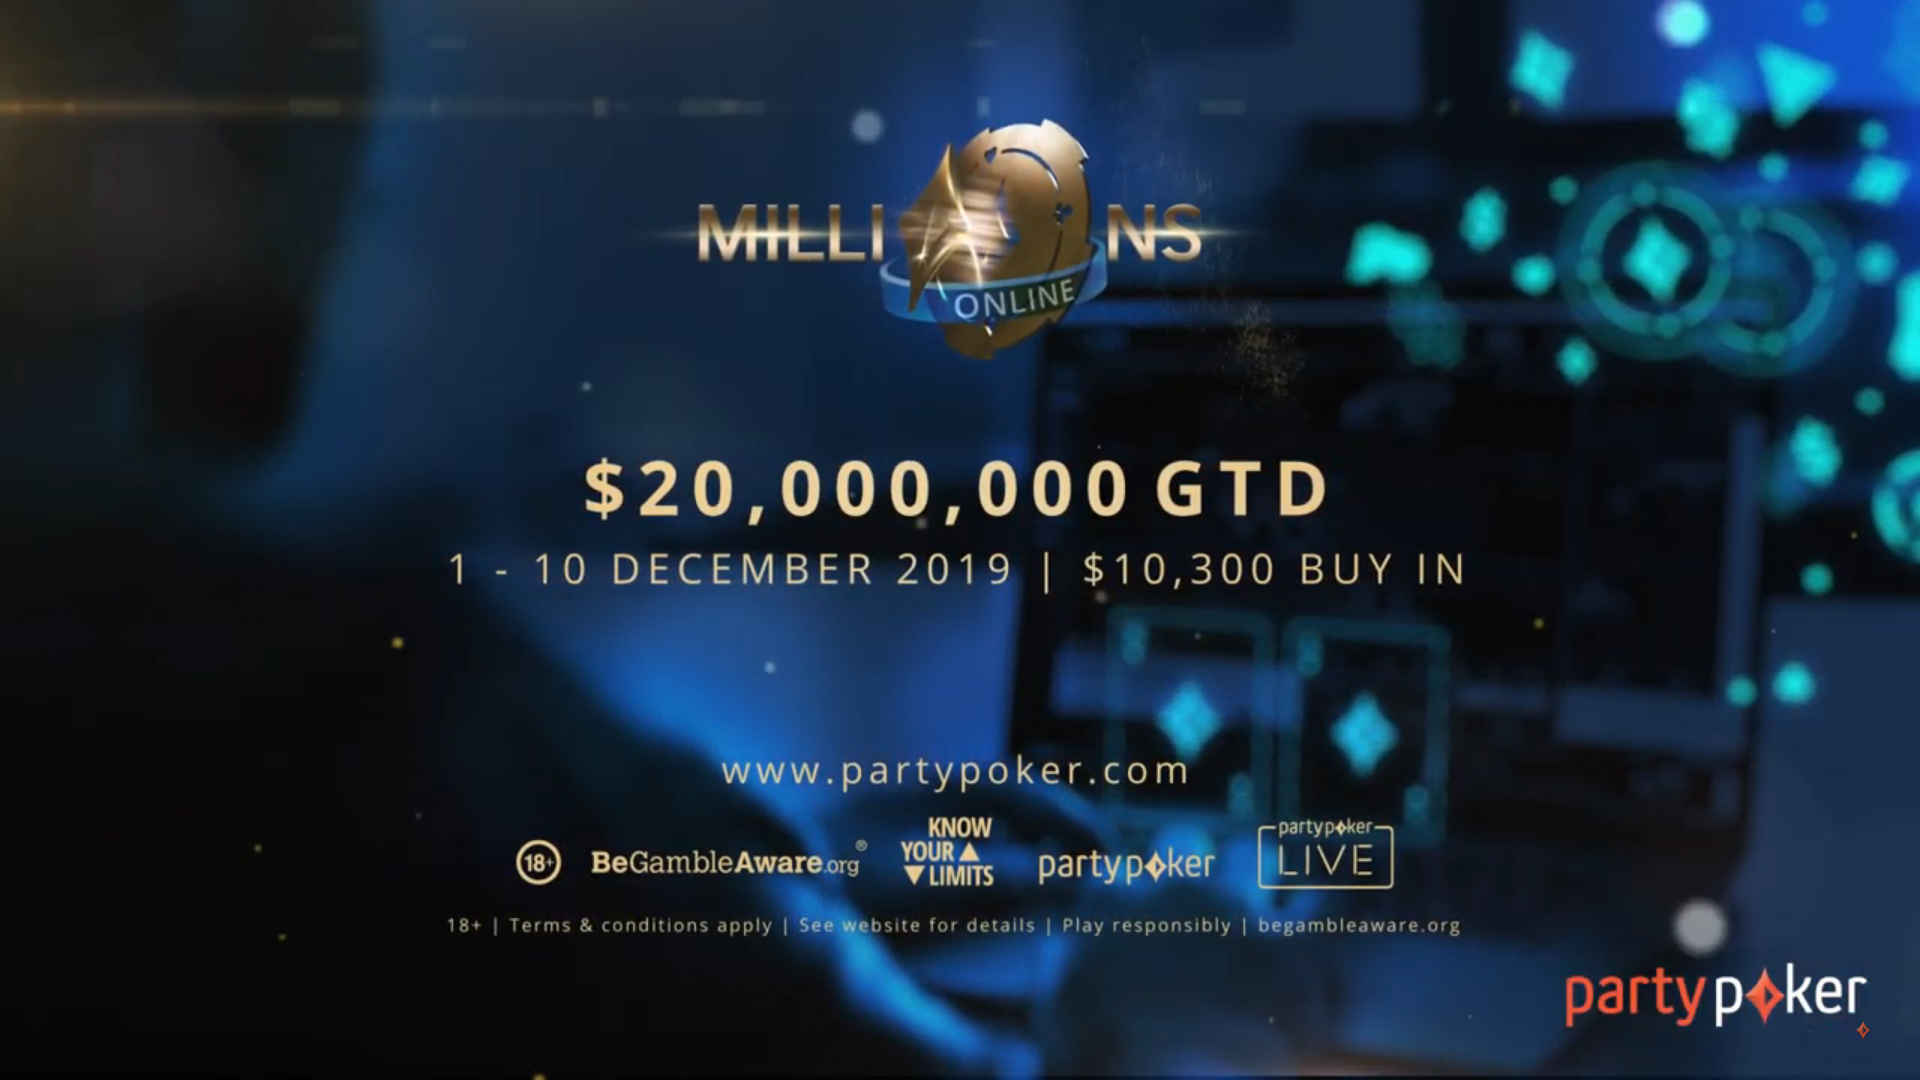 partypoker Offers an Extra $1 Million Bonus for MILLIONS Online